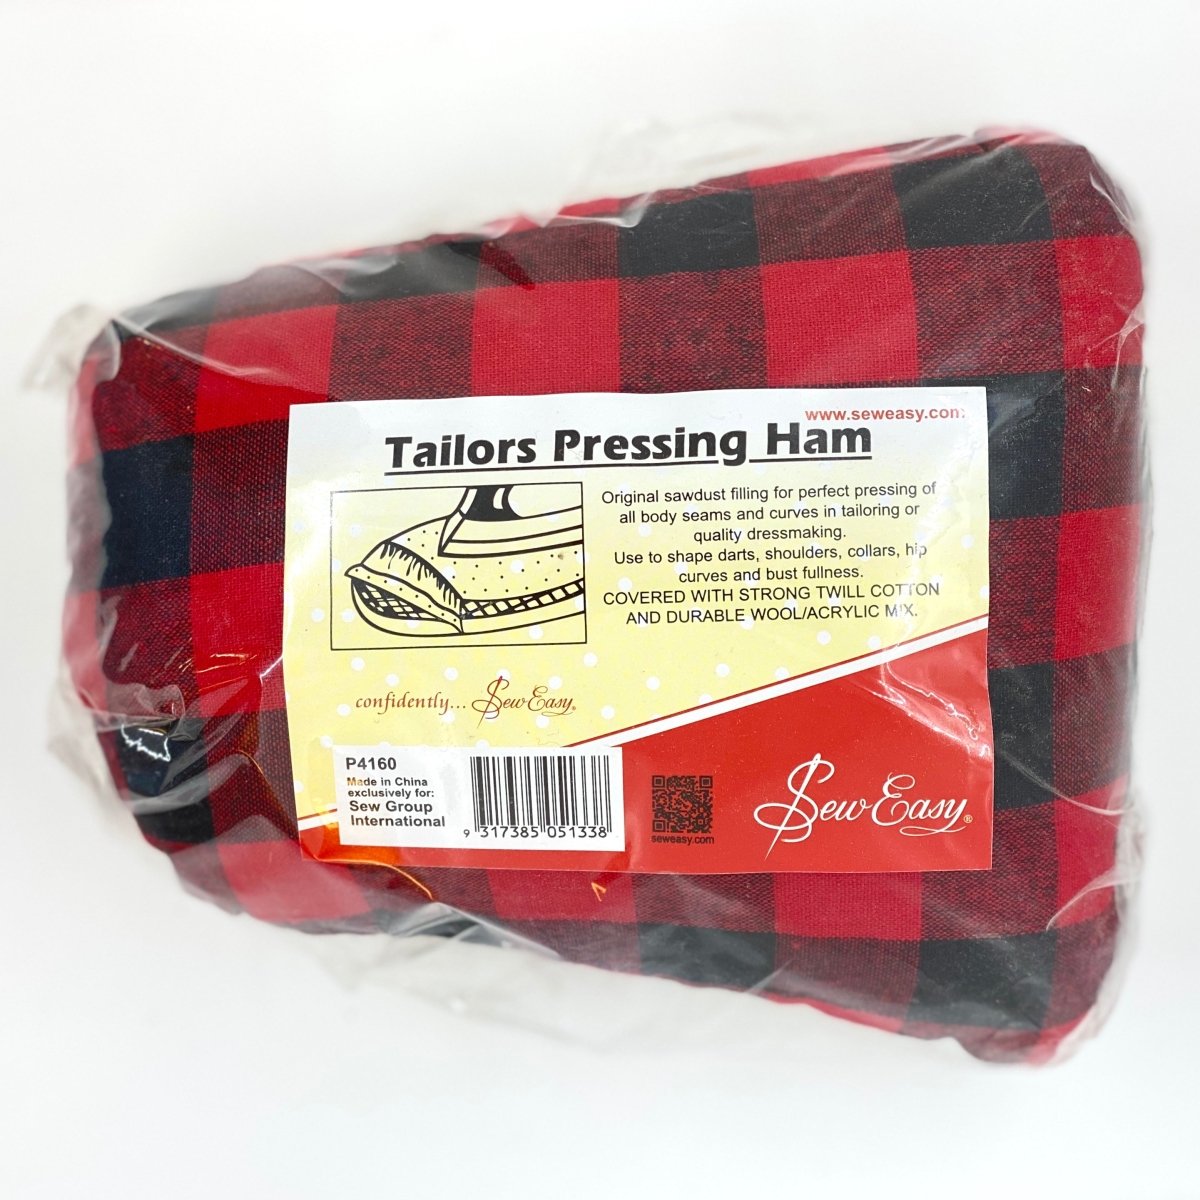 Sew Easy - Tailors Pressing Ham - Sewing Gem